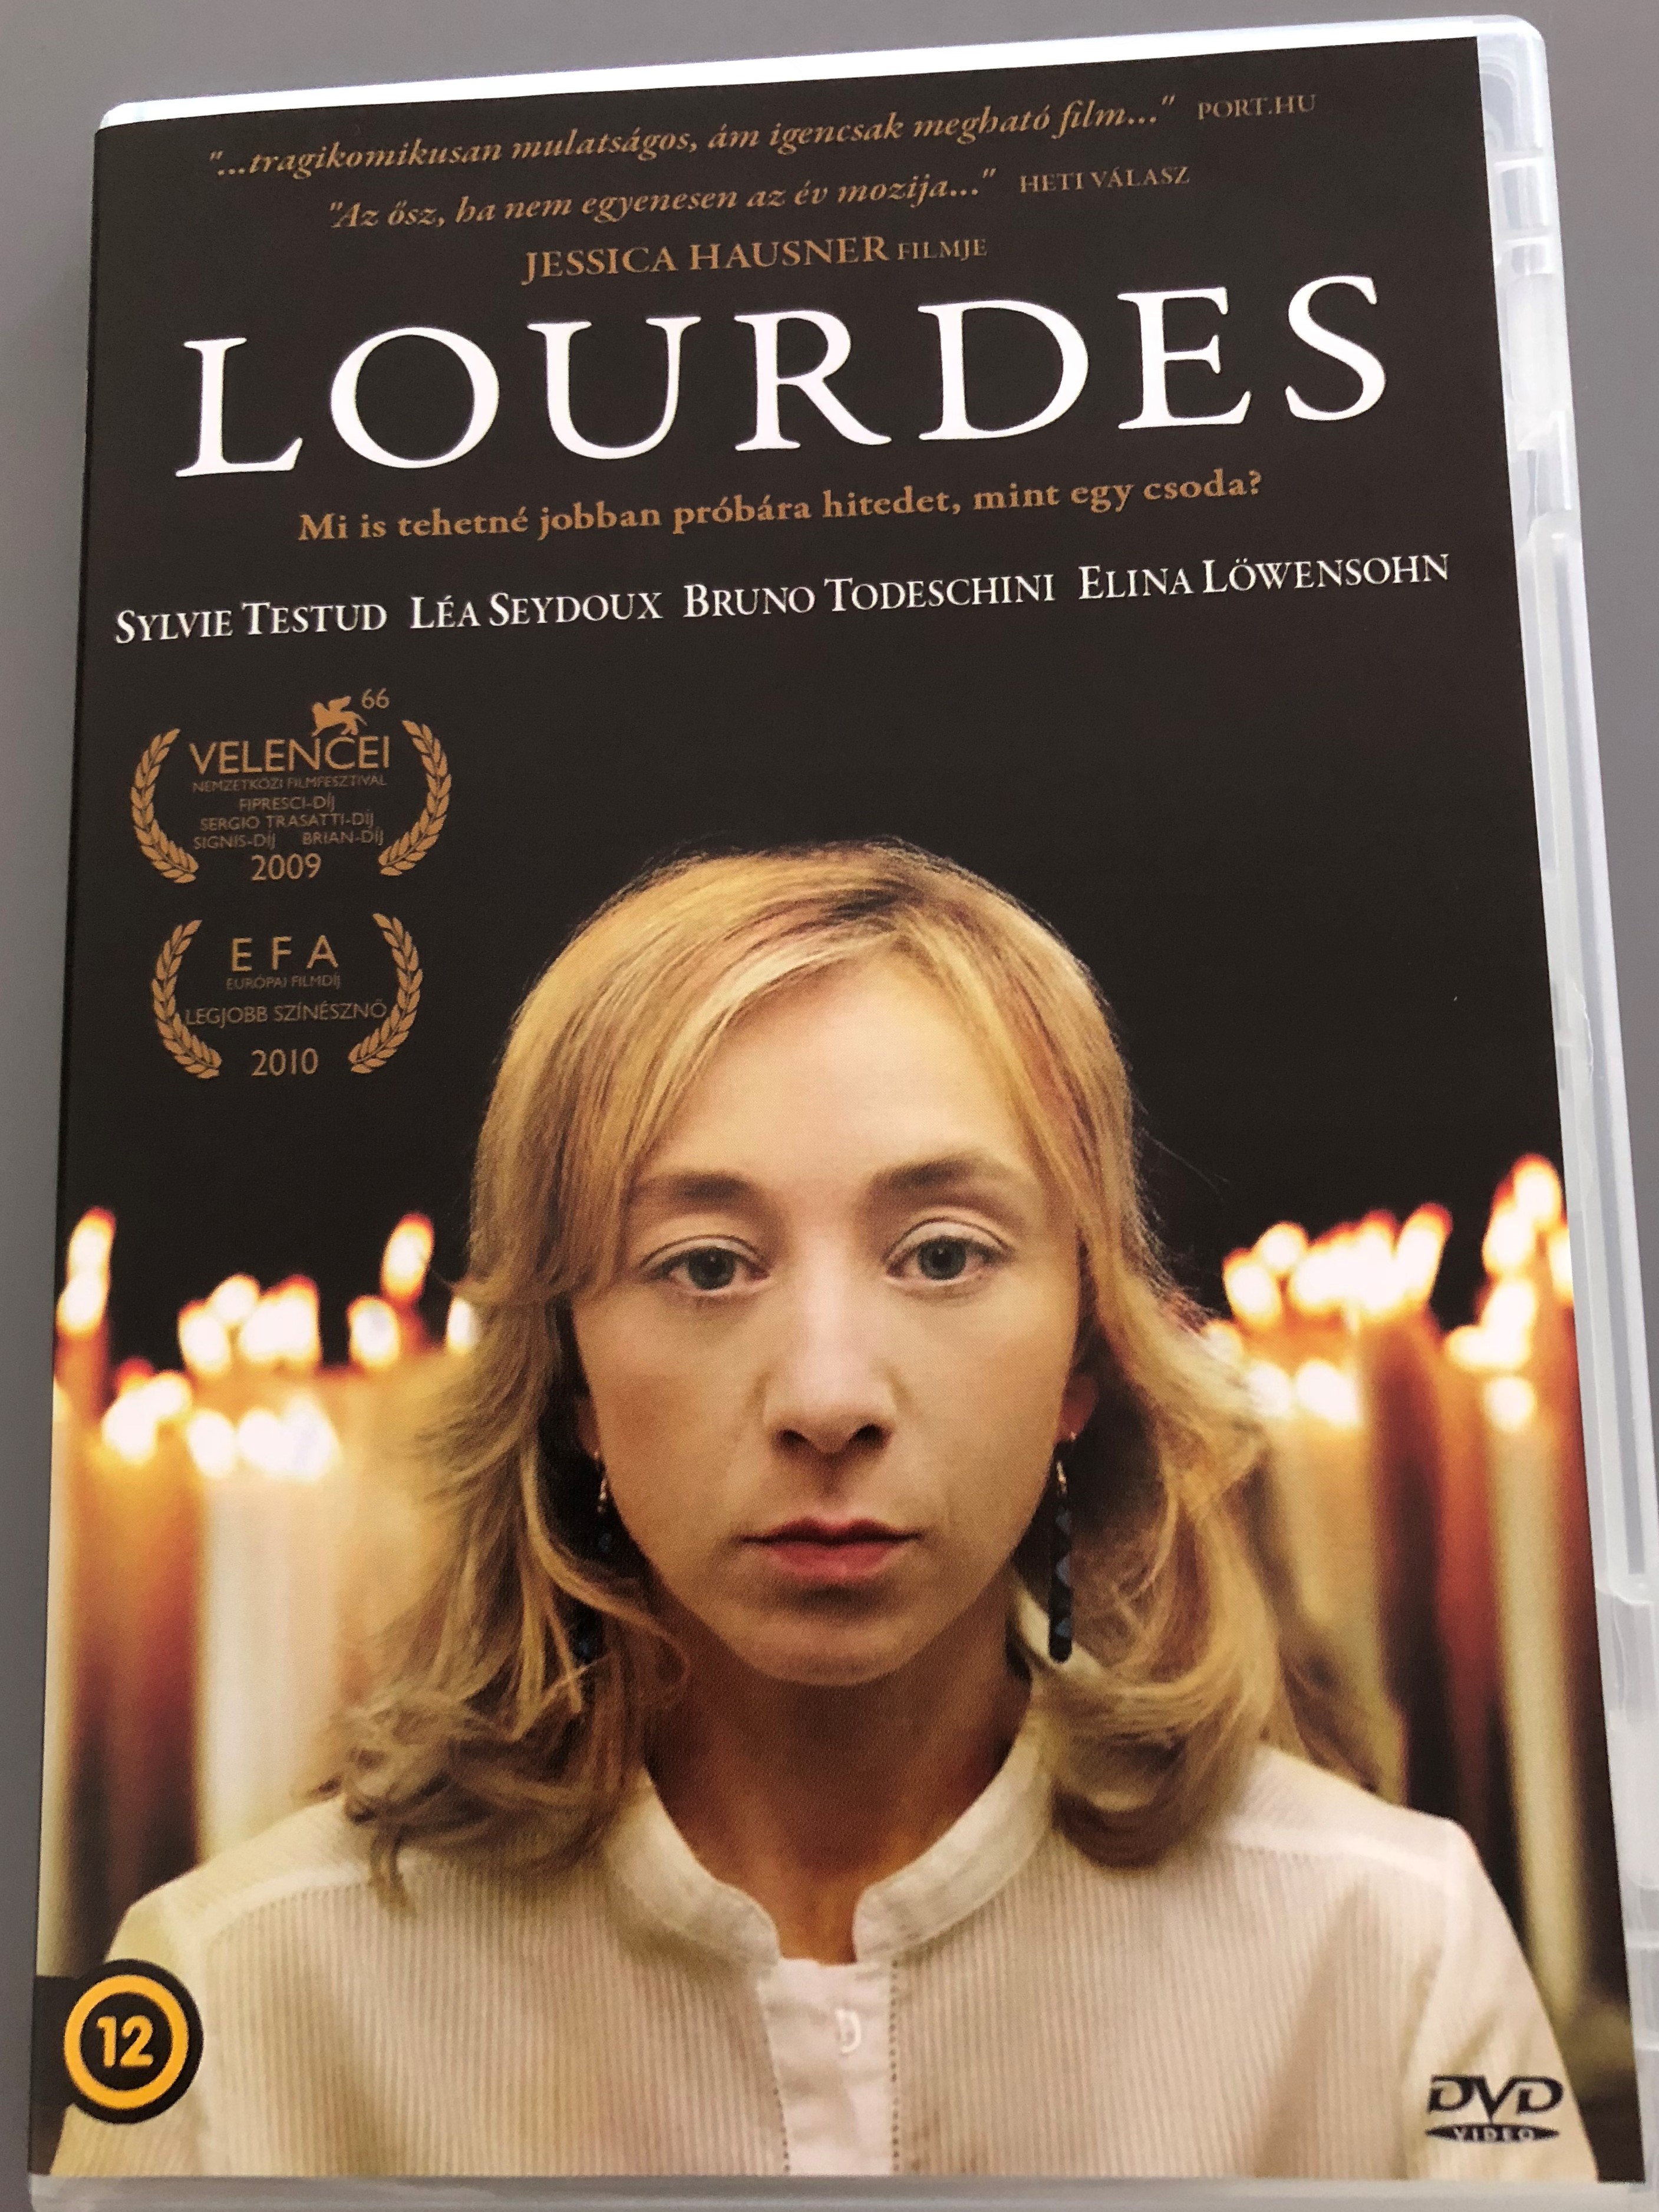 -lourdes-dvd-2009-directed-by-jessica-hausner-1-.jpg